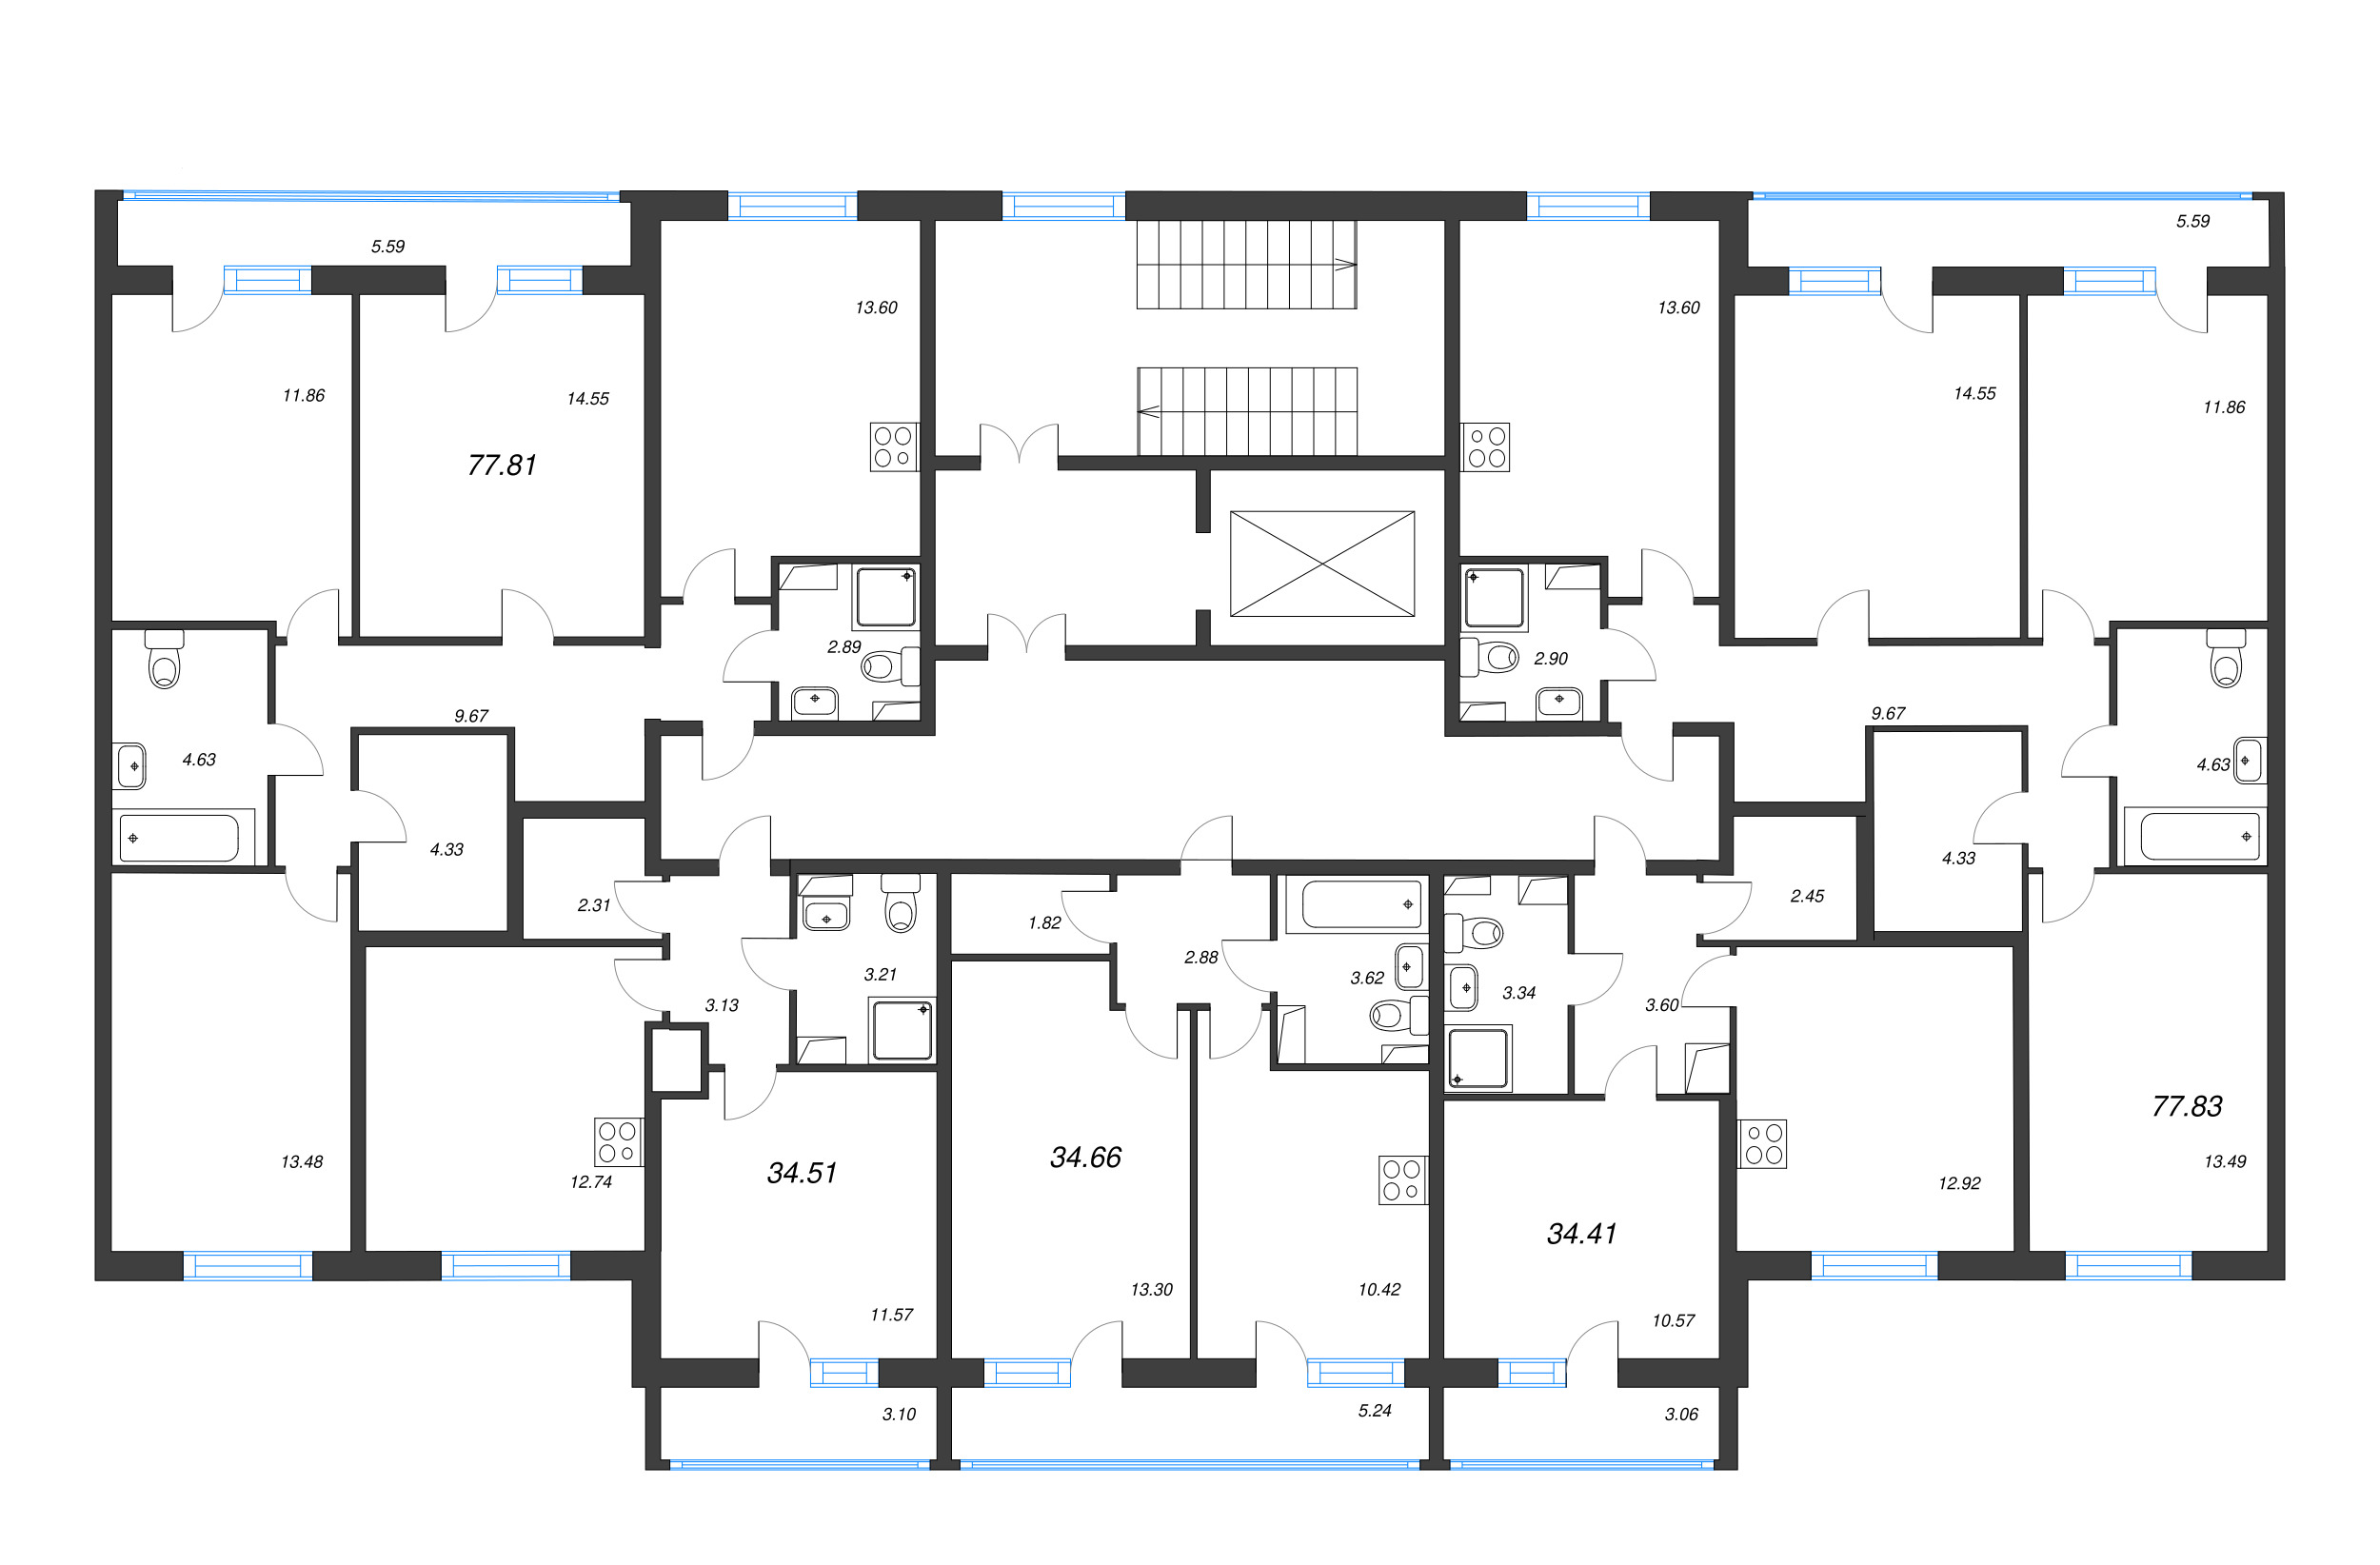 2-комнатная (Евро) квартира, 34.51 м² - планировка этажа